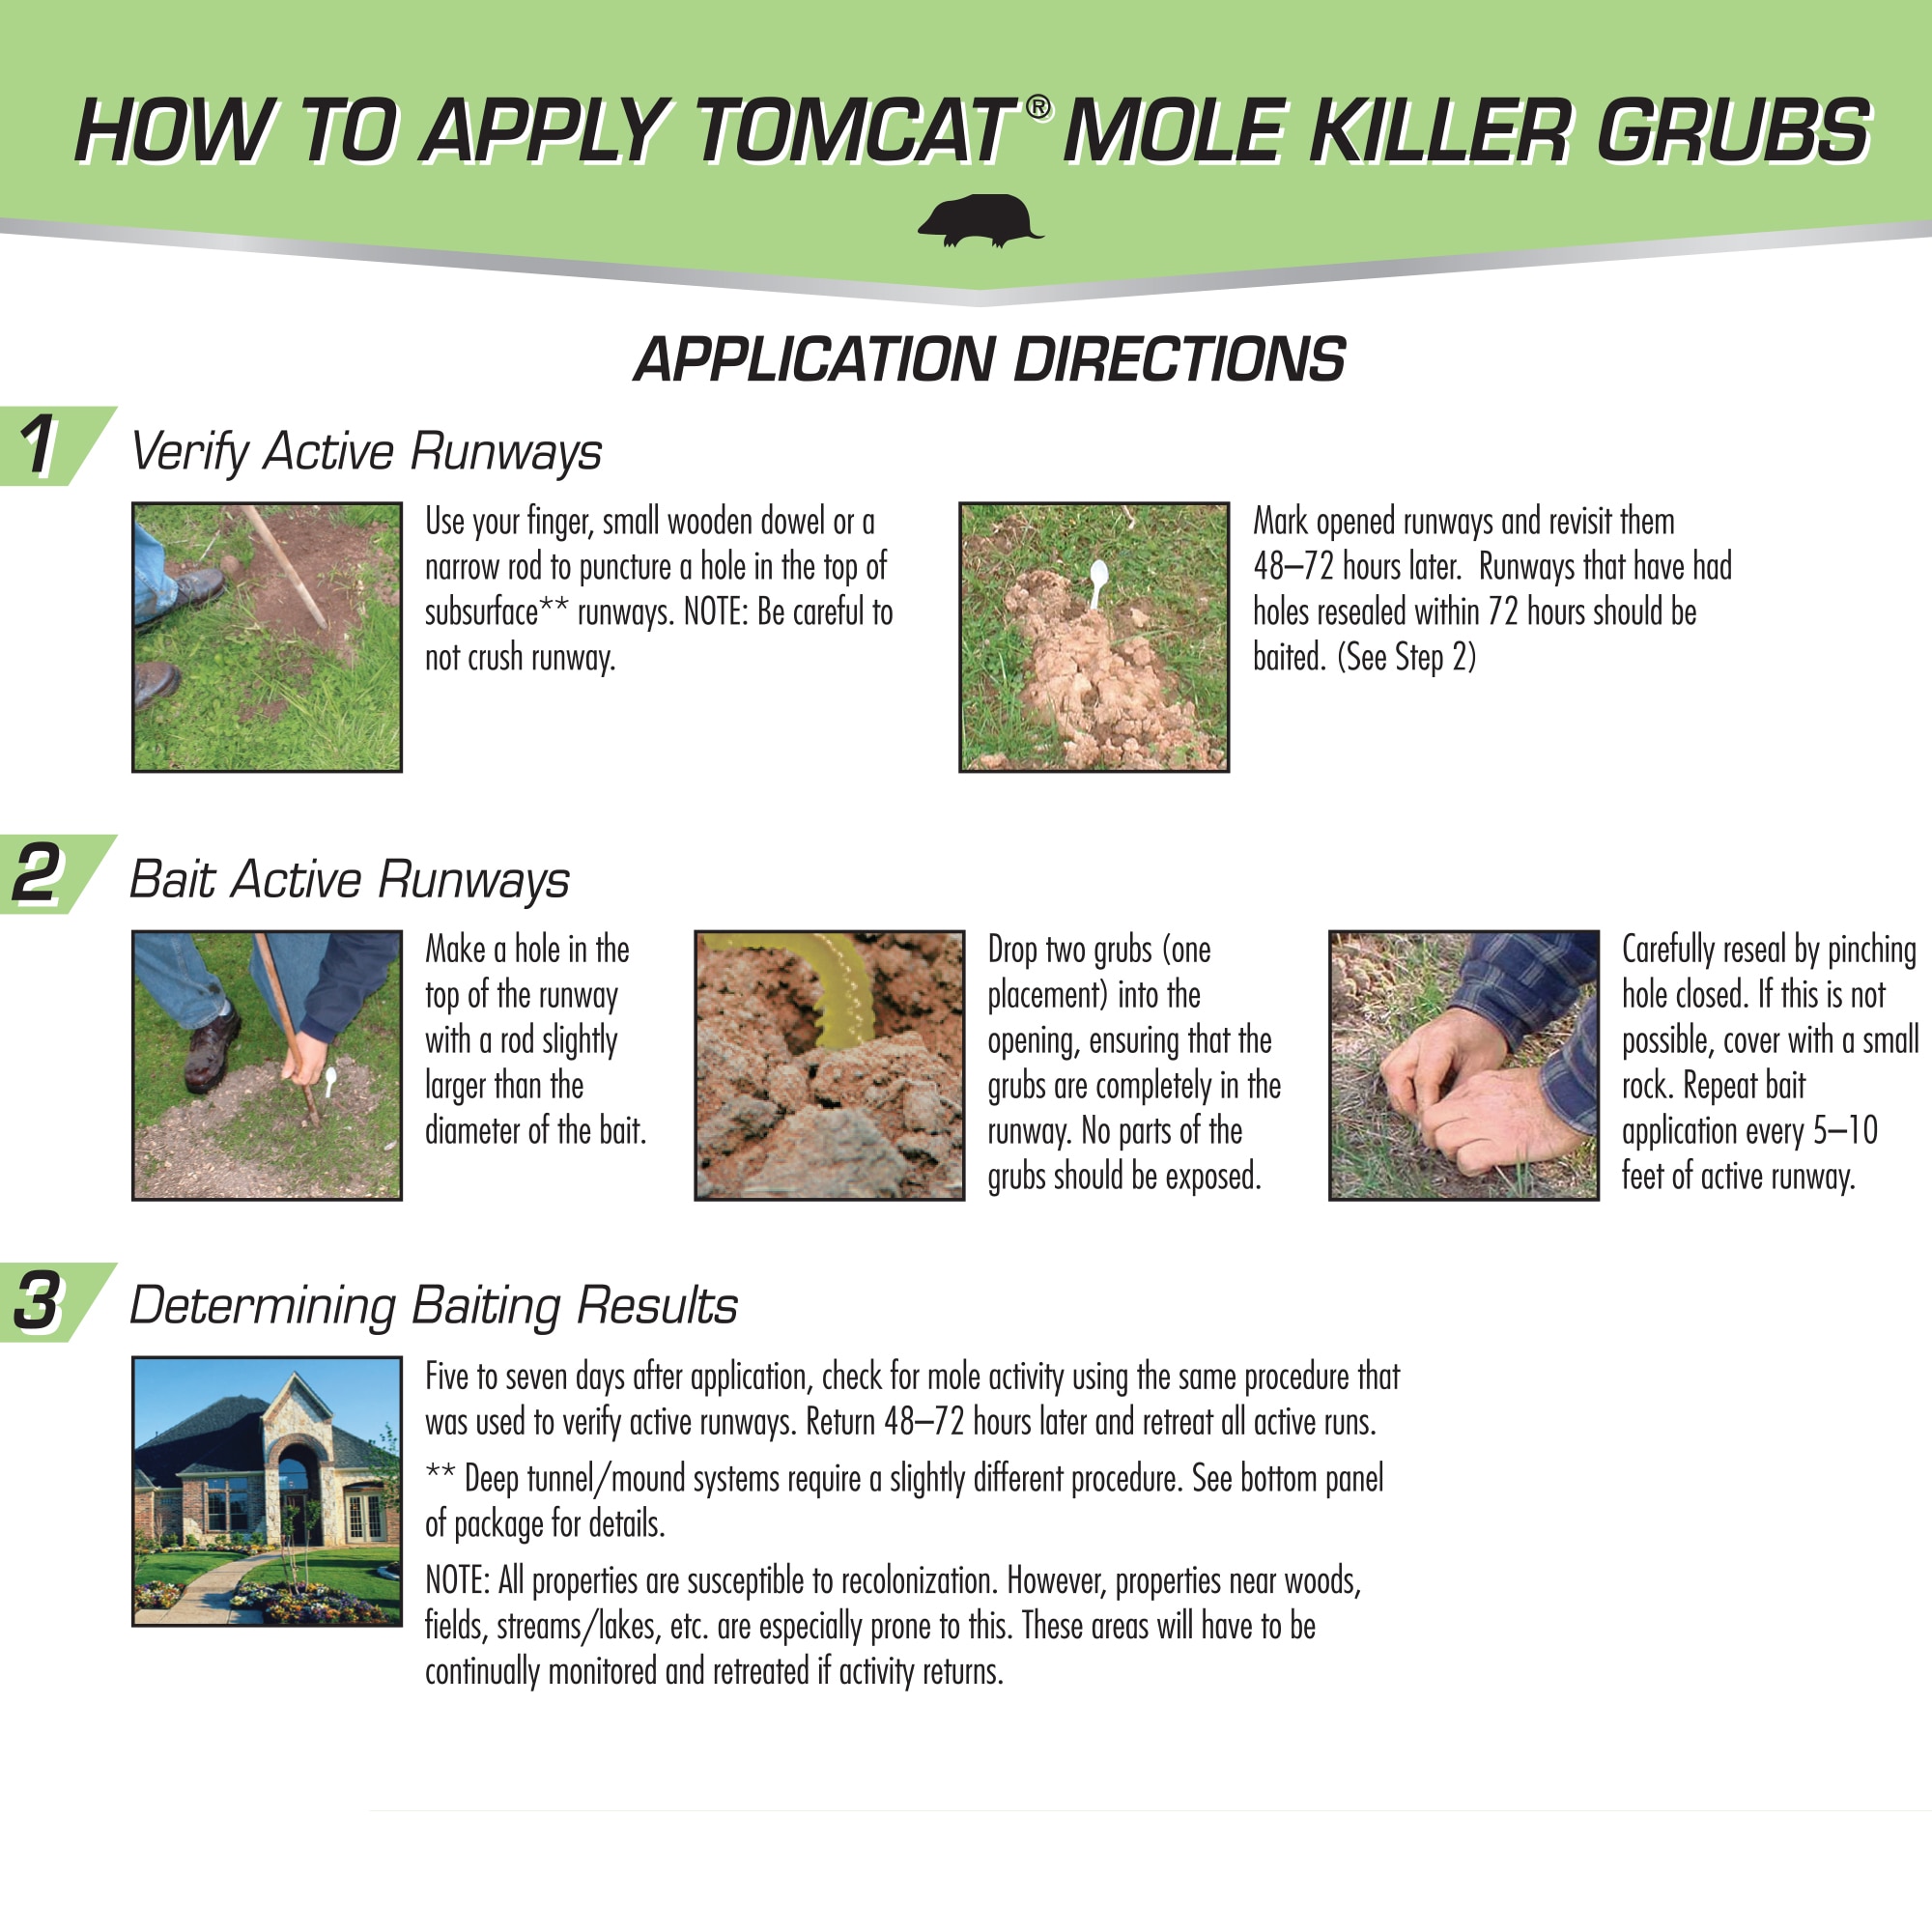 TOMCAT 6 Oz. Mole & Gopher Bait Killer - Thomas Do-it Center